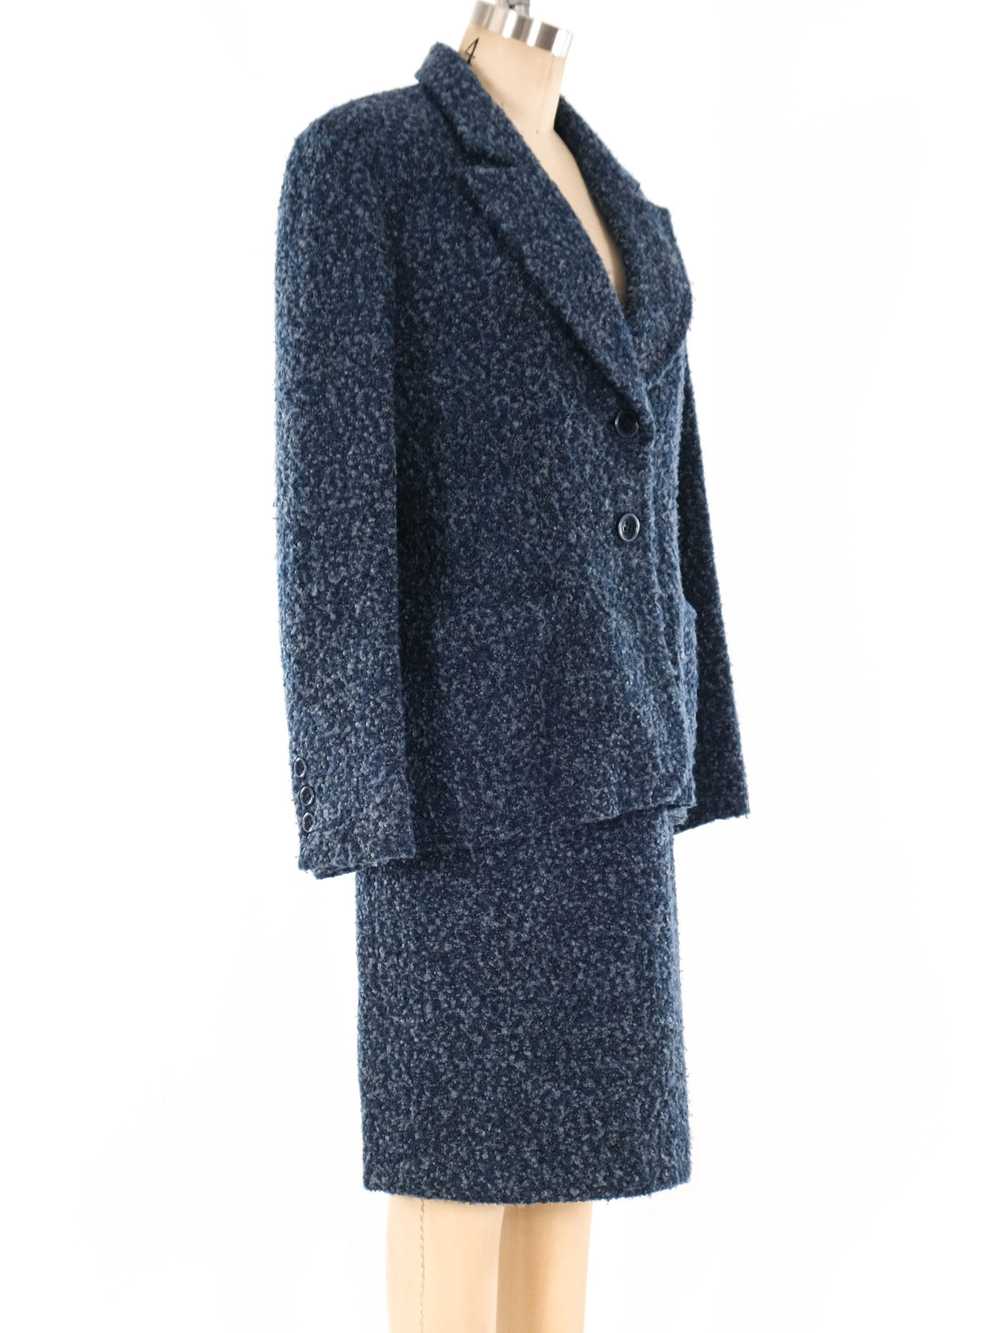 Yves Saint Laurent Boucle Tweed Suit - image 3